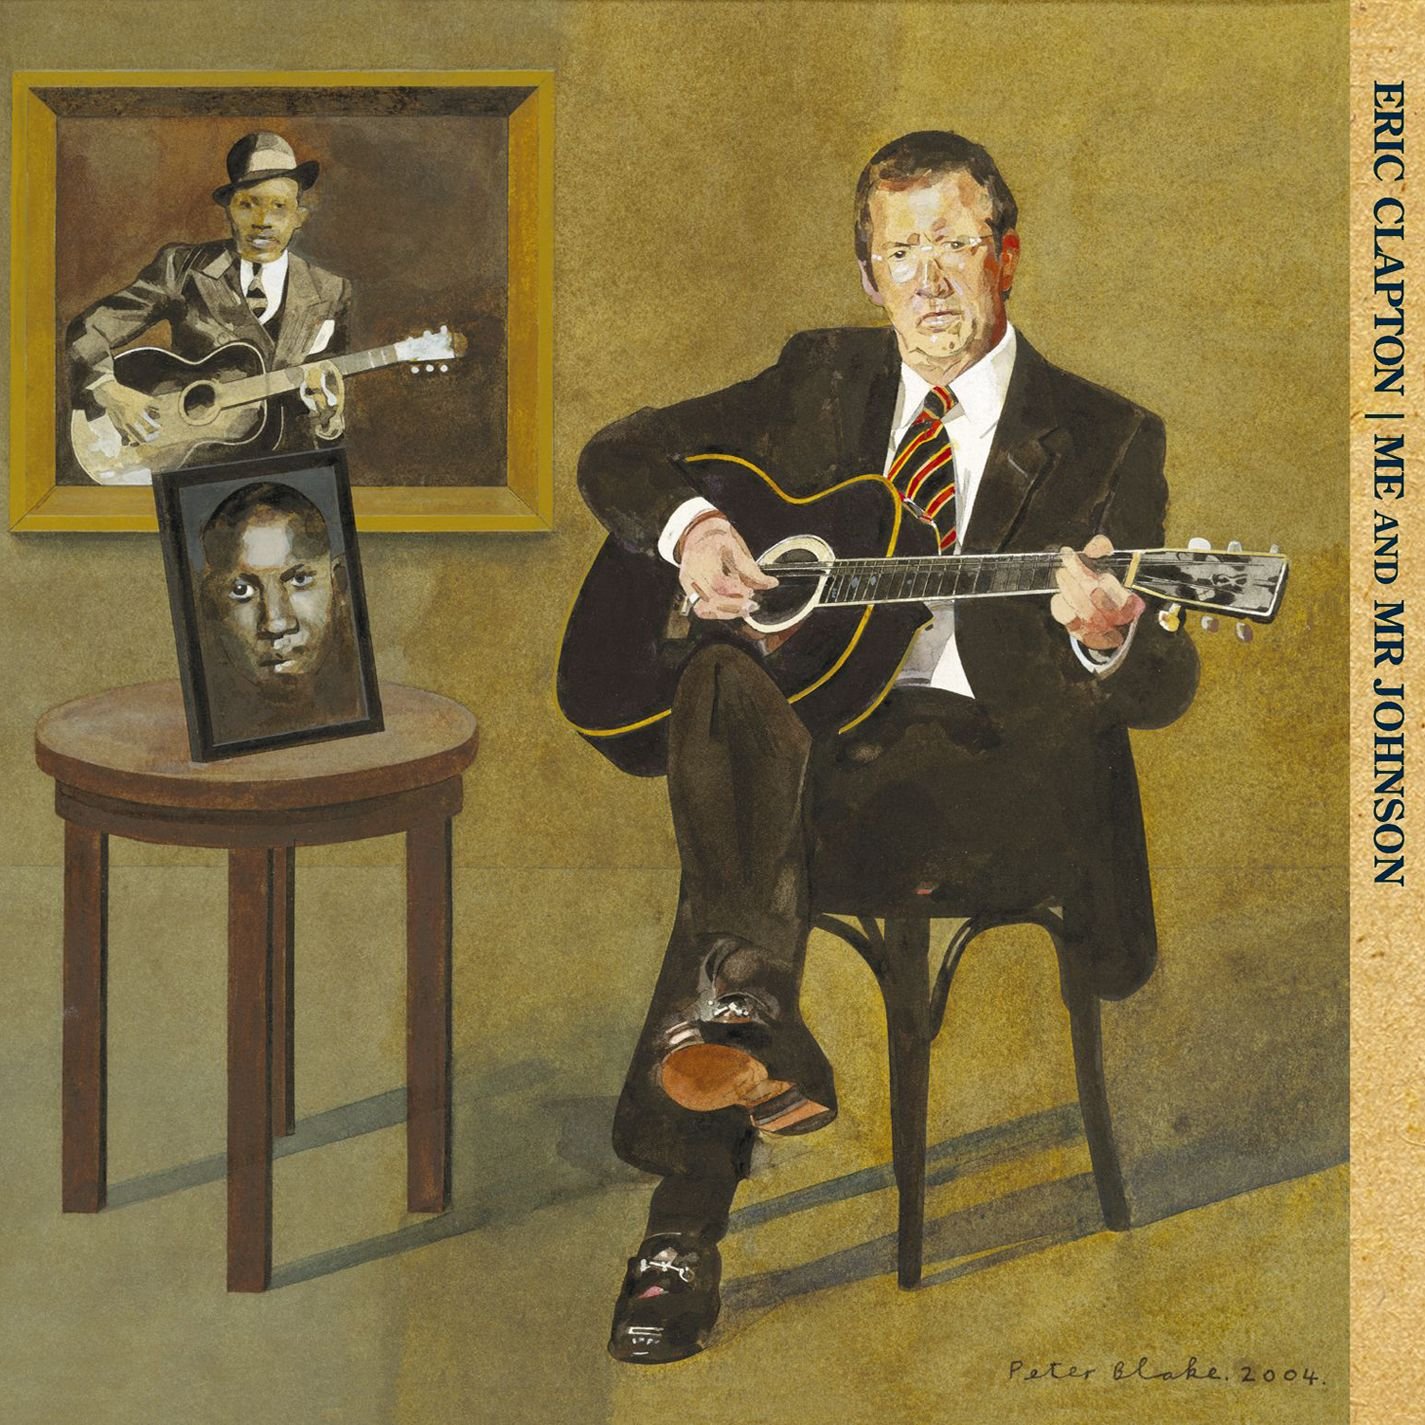 Eric Clapton "Me & Mr. Johnson" LP